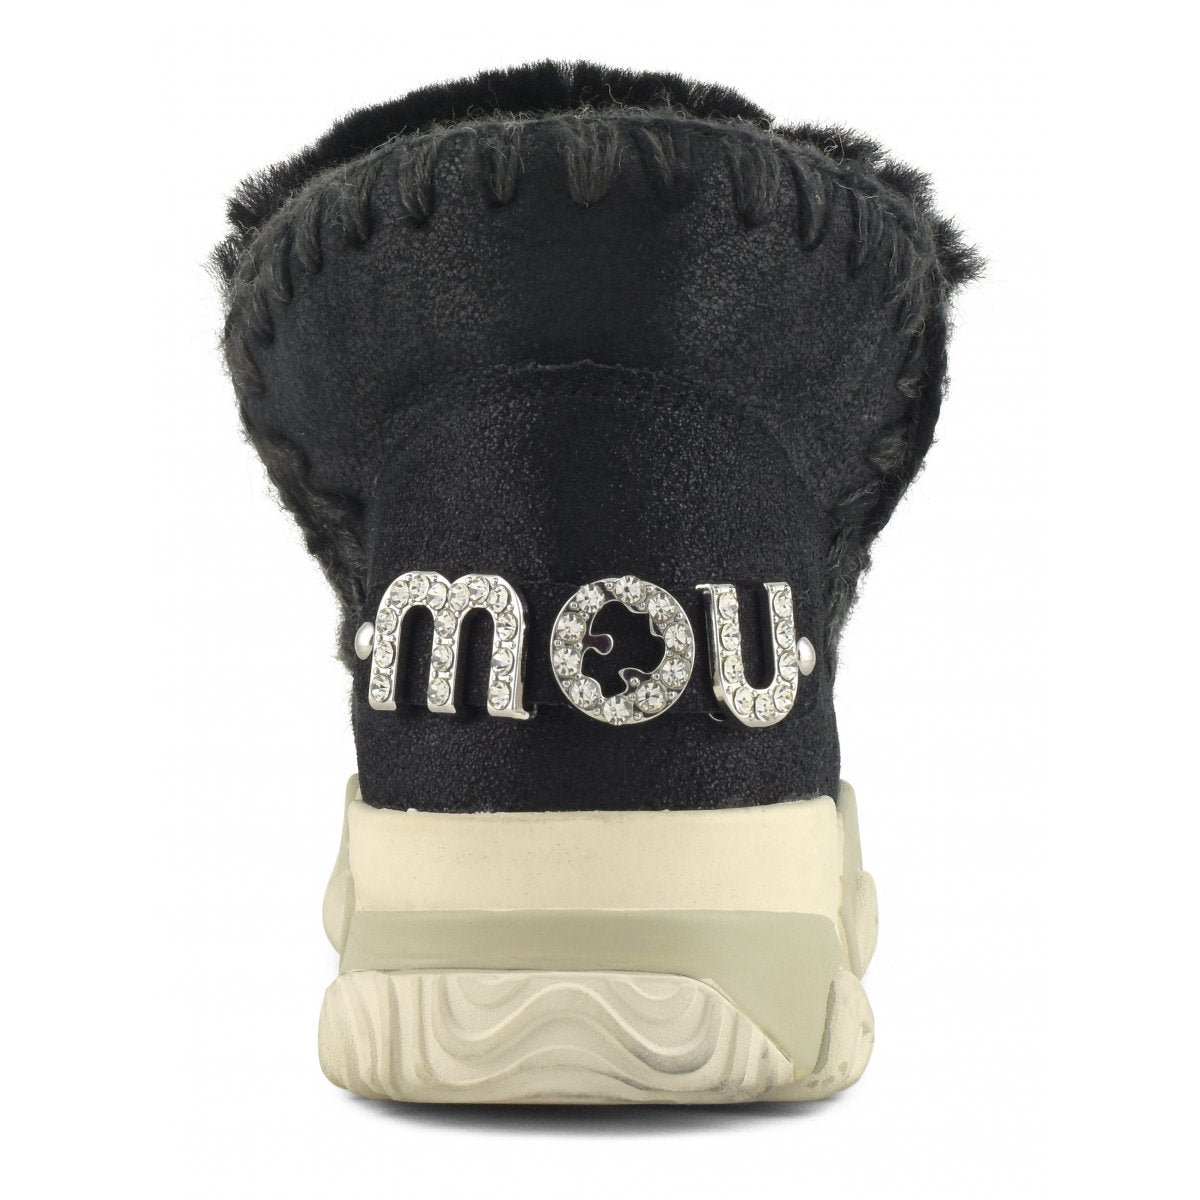 MU.FW201005C - Eskimo trainer - Accessori calzature